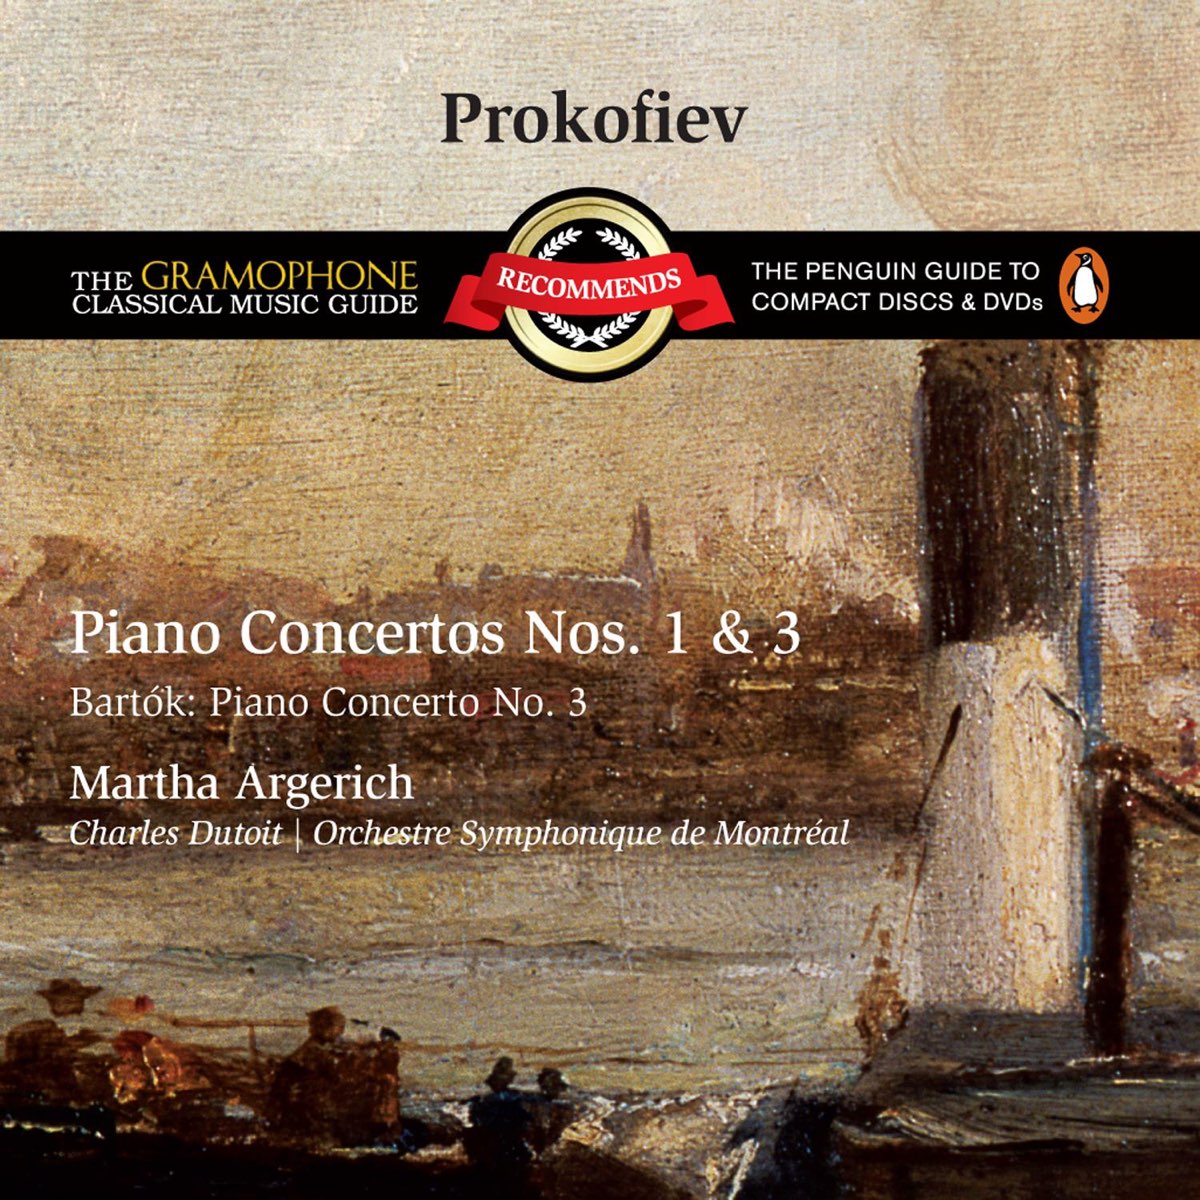 ‎Prokofiev: Piano Concertos Nos. 1 & 3 by Martha Argerich on Apple Music